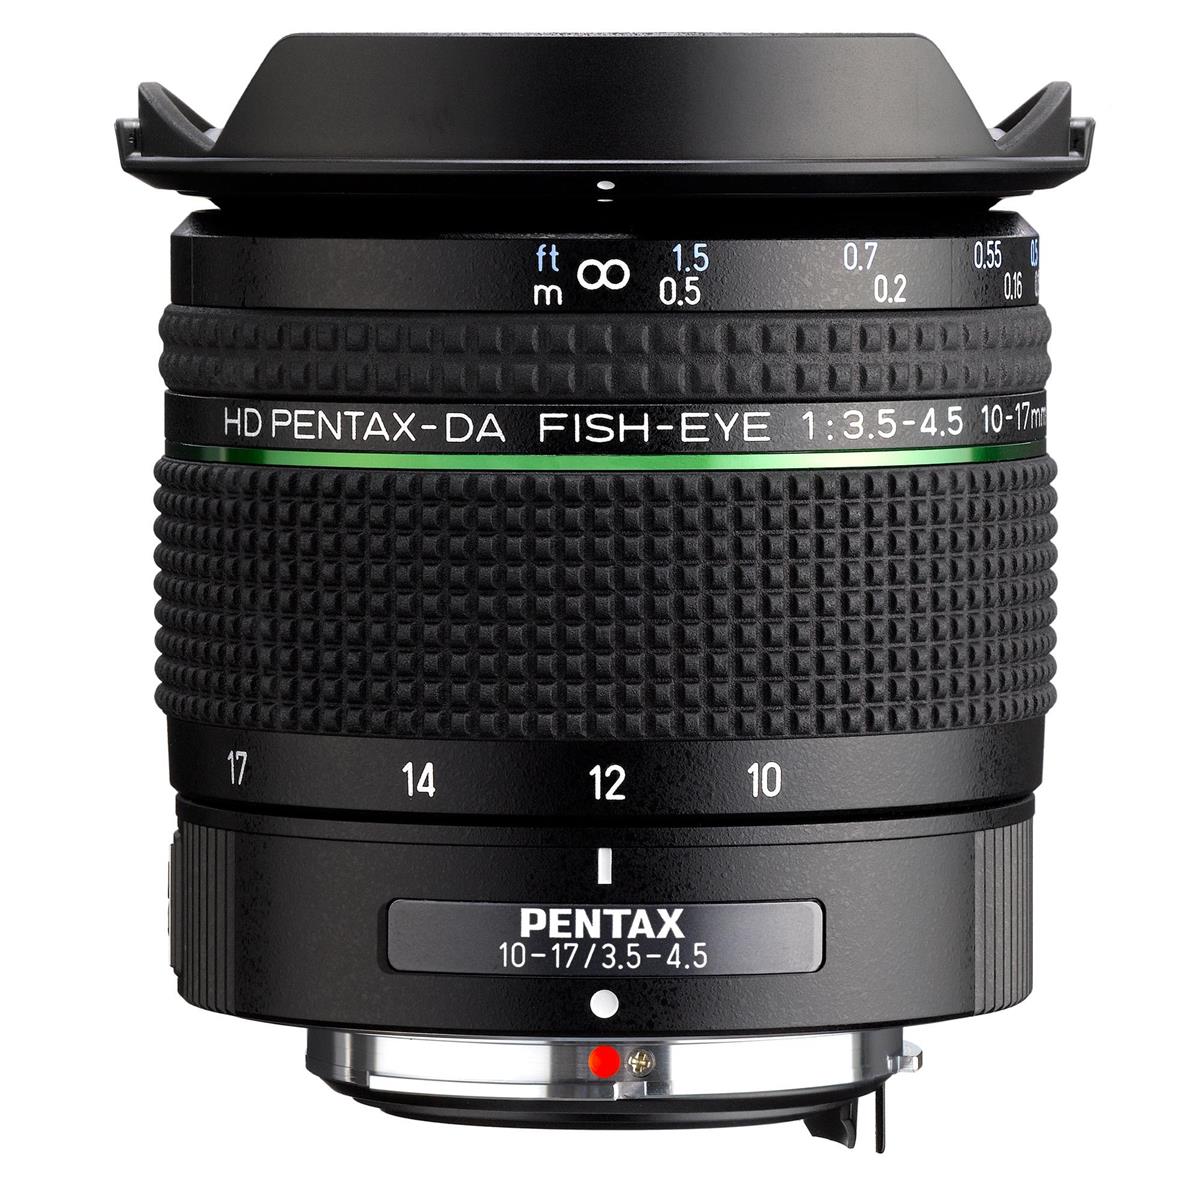 Image of Pentax HD Pentax-DA Fisheye 10-17mm F3.5-4.5 ED Lens